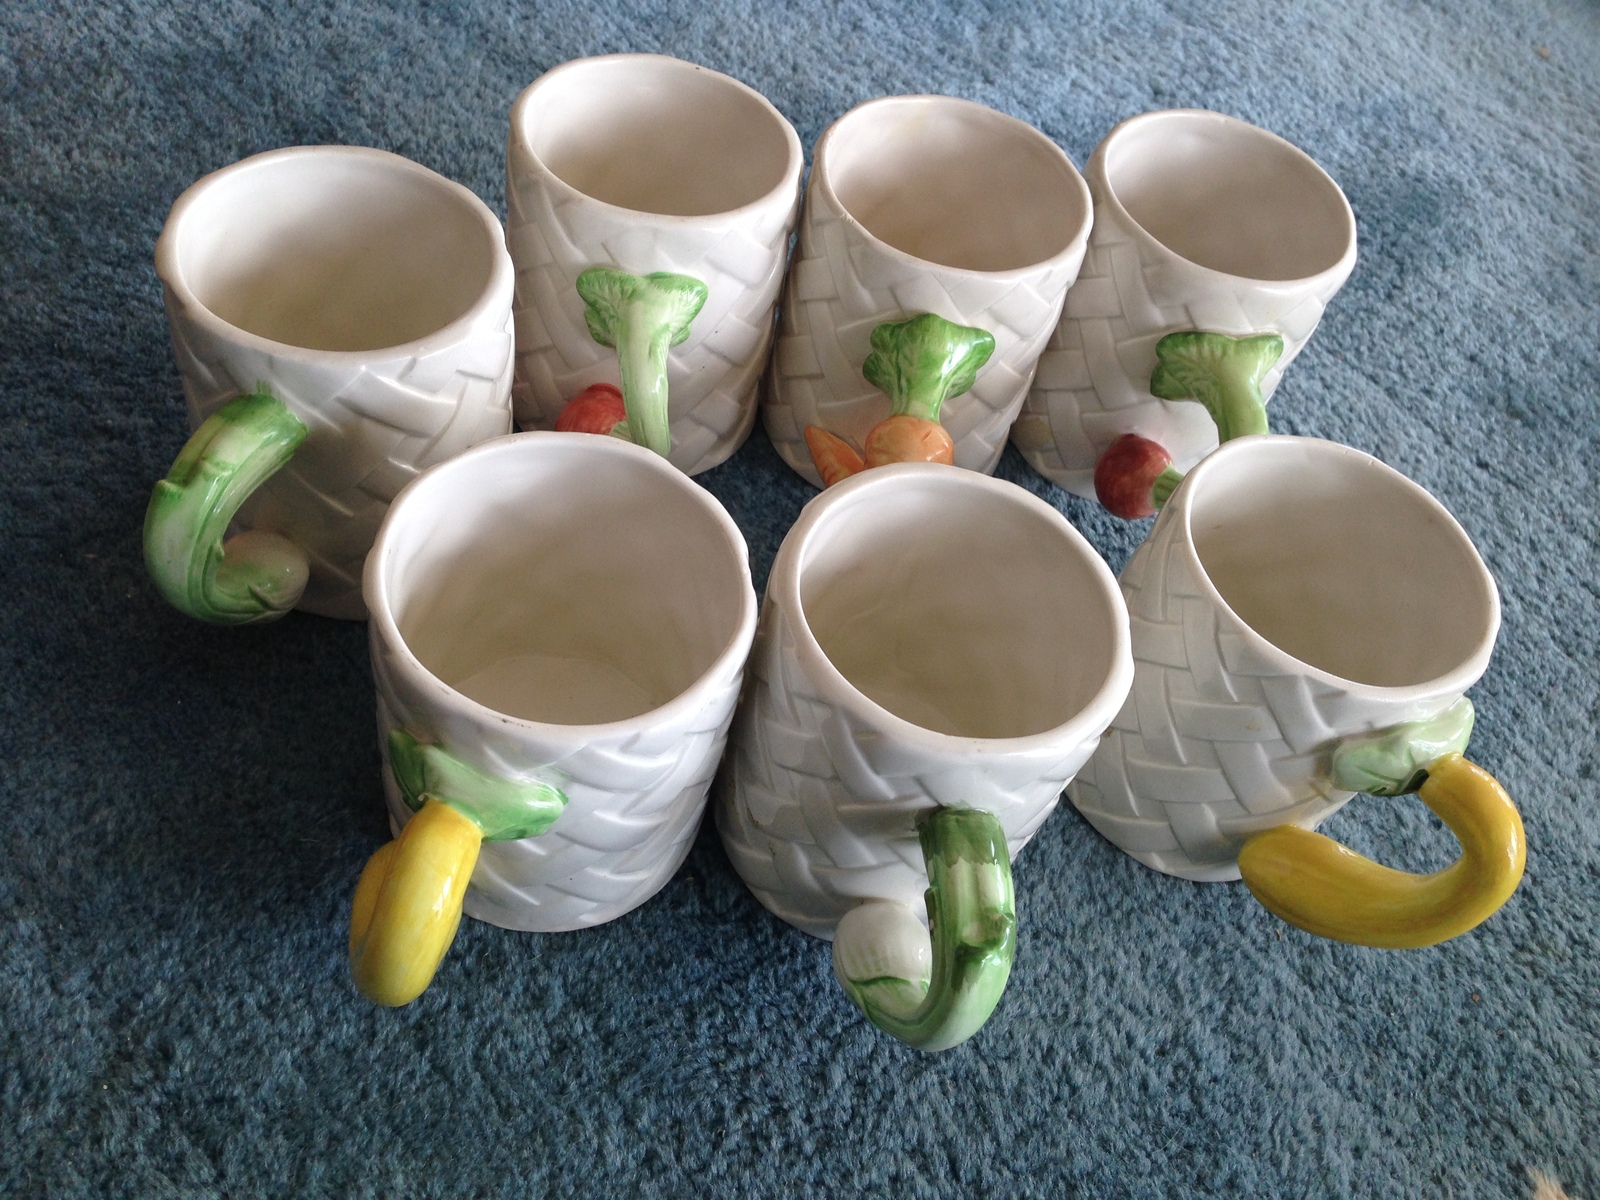 set of 7 ceramic mugs with vegetable handle motif - $49.99